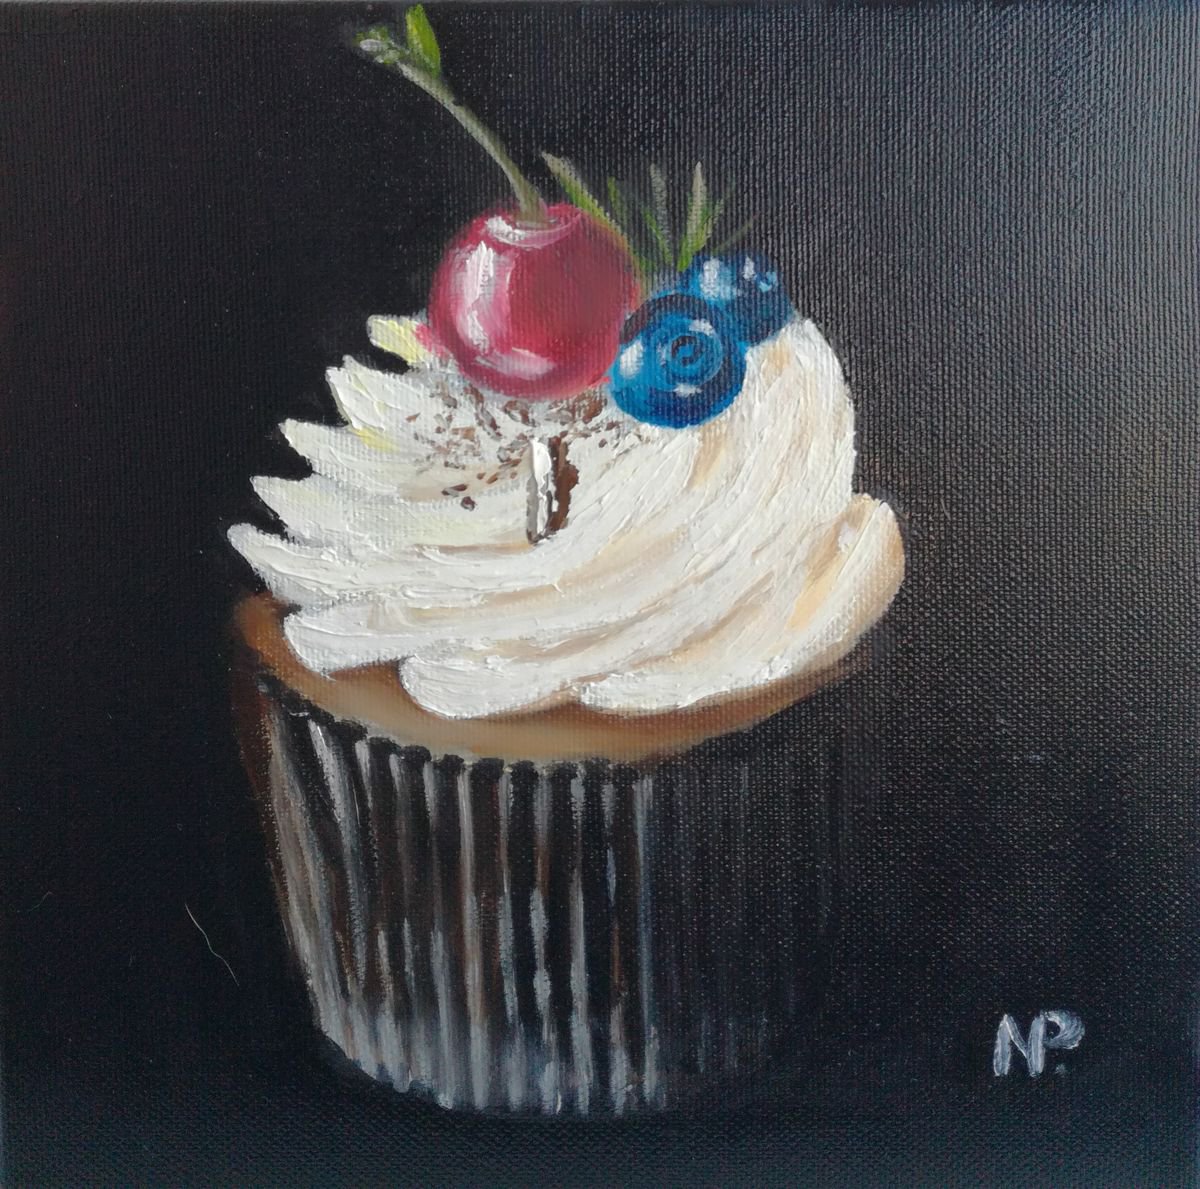 Cupcake, still life, sweet, food, original oil painting by Nataliia Plakhotnyk